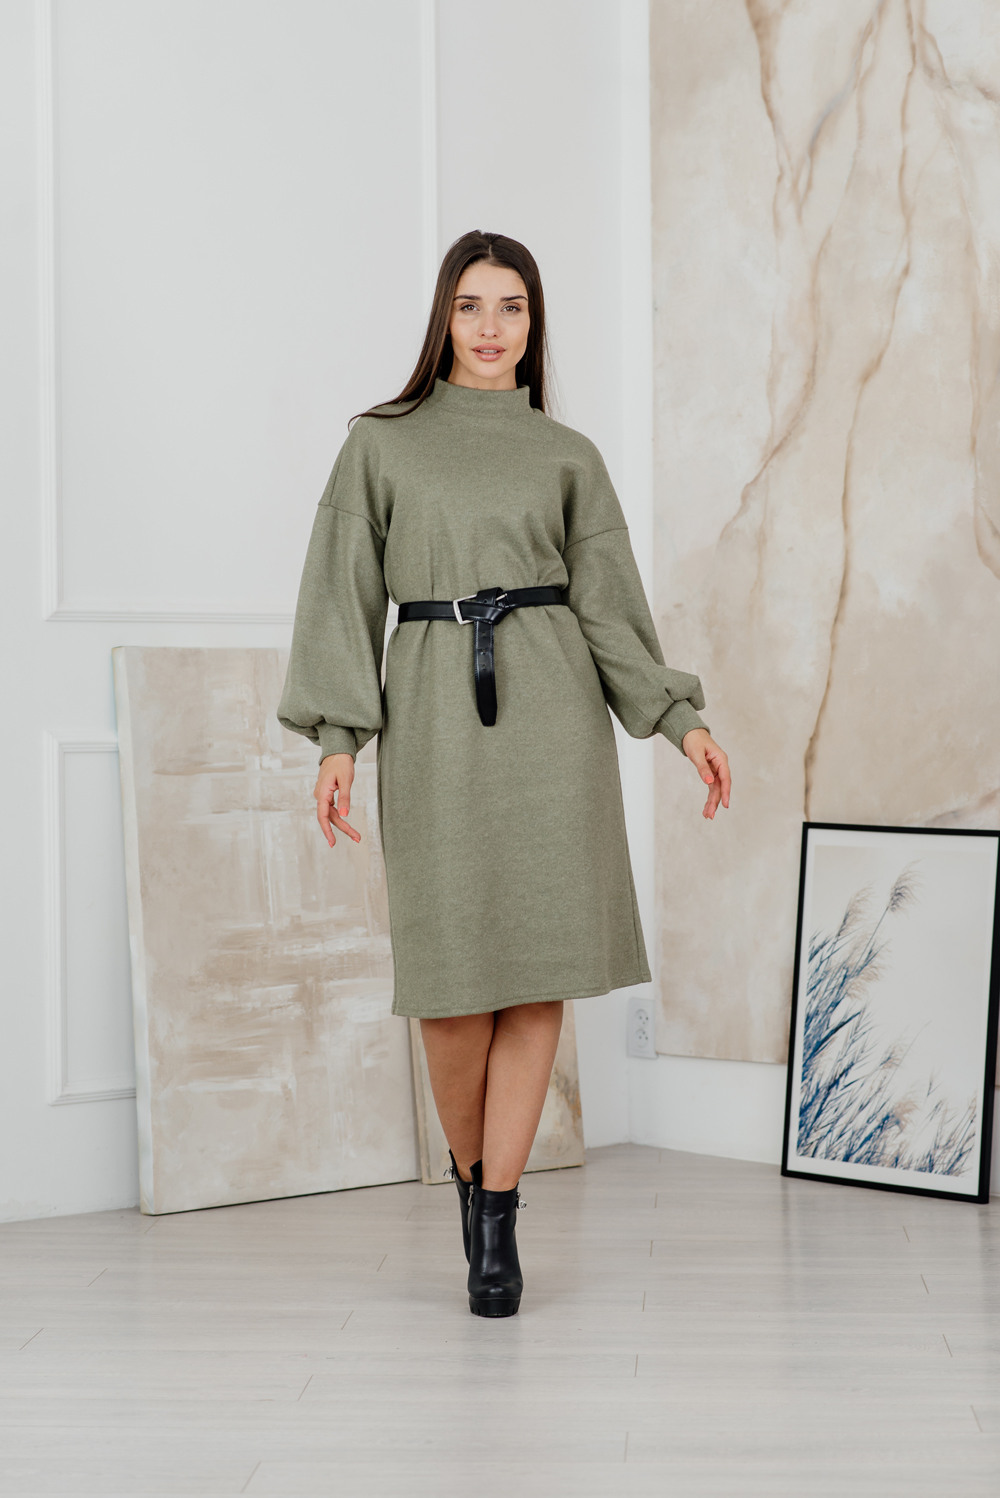 Warm angora dress with stand-up collar